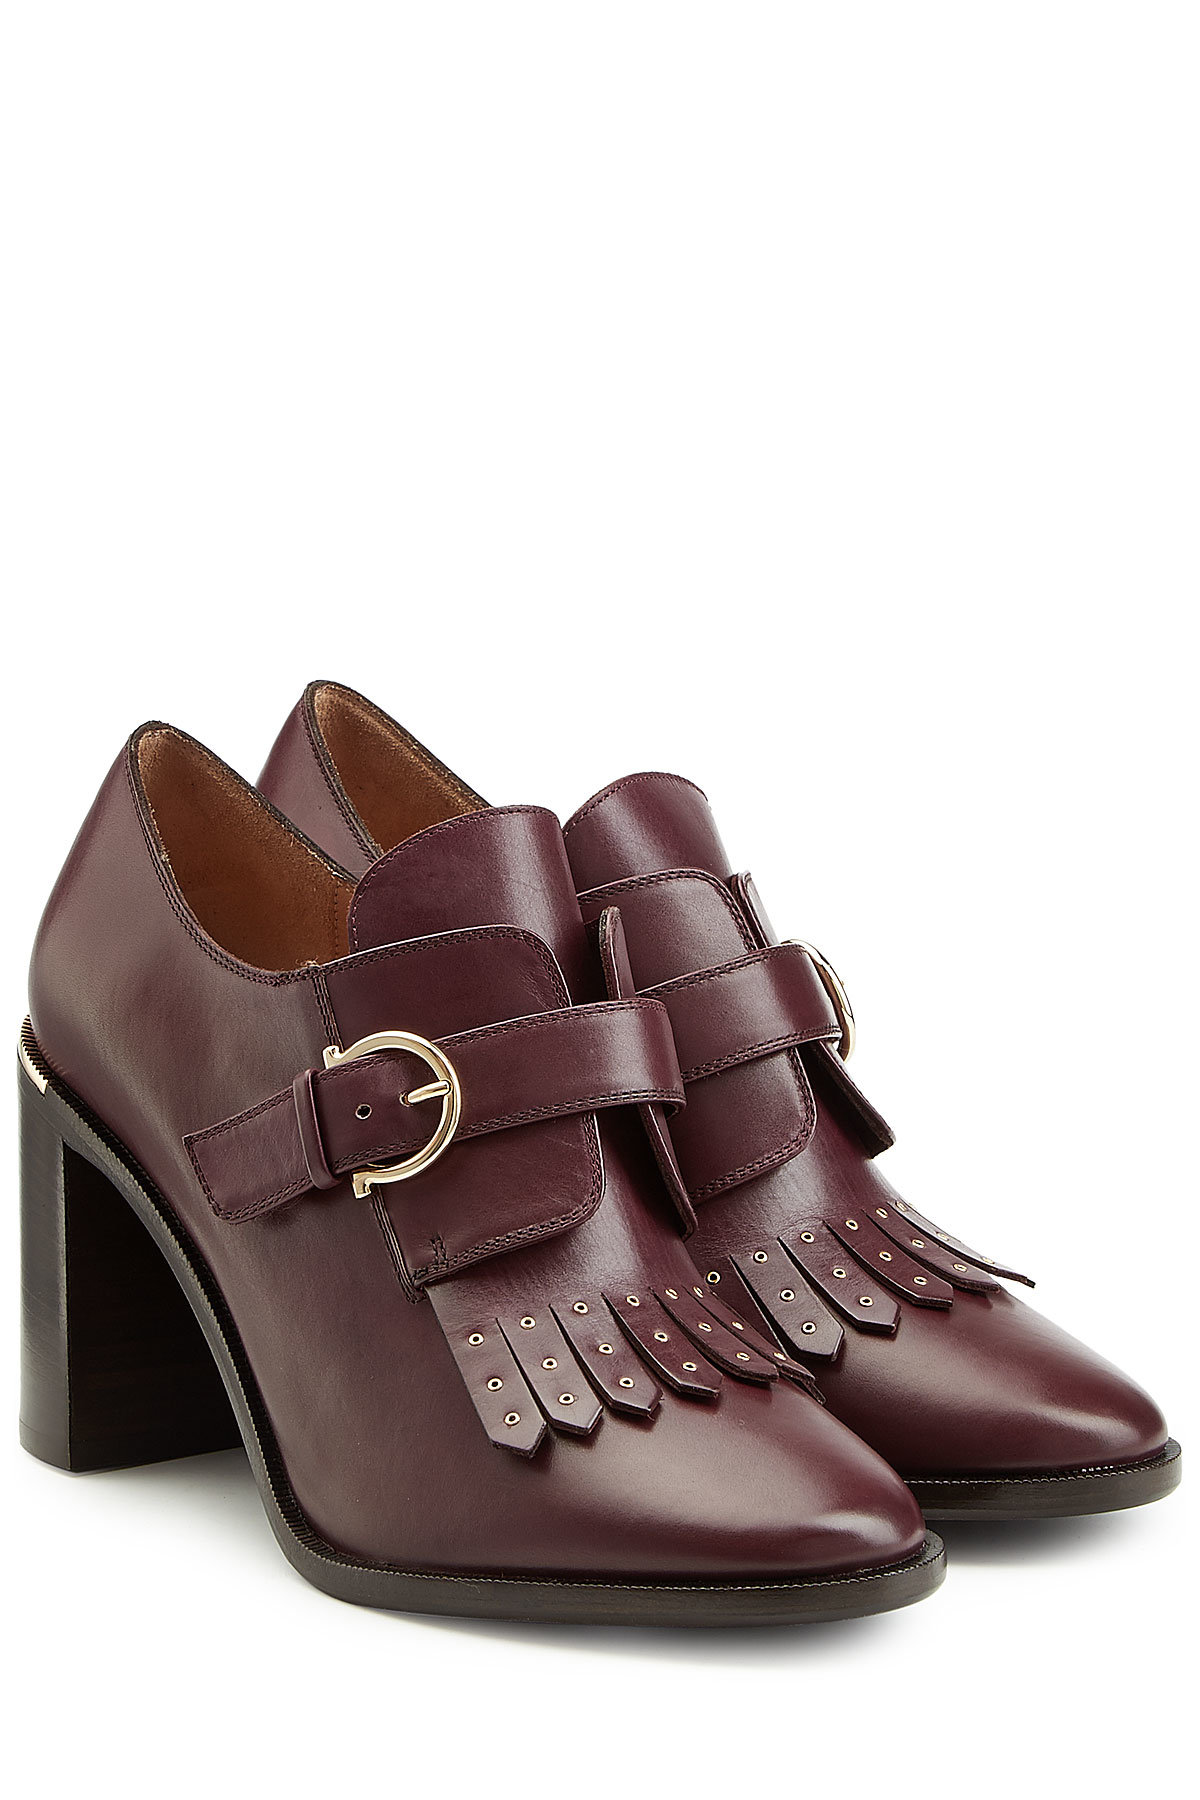 Salvatore Ferragamo - Fringed Leather Heeled Boots